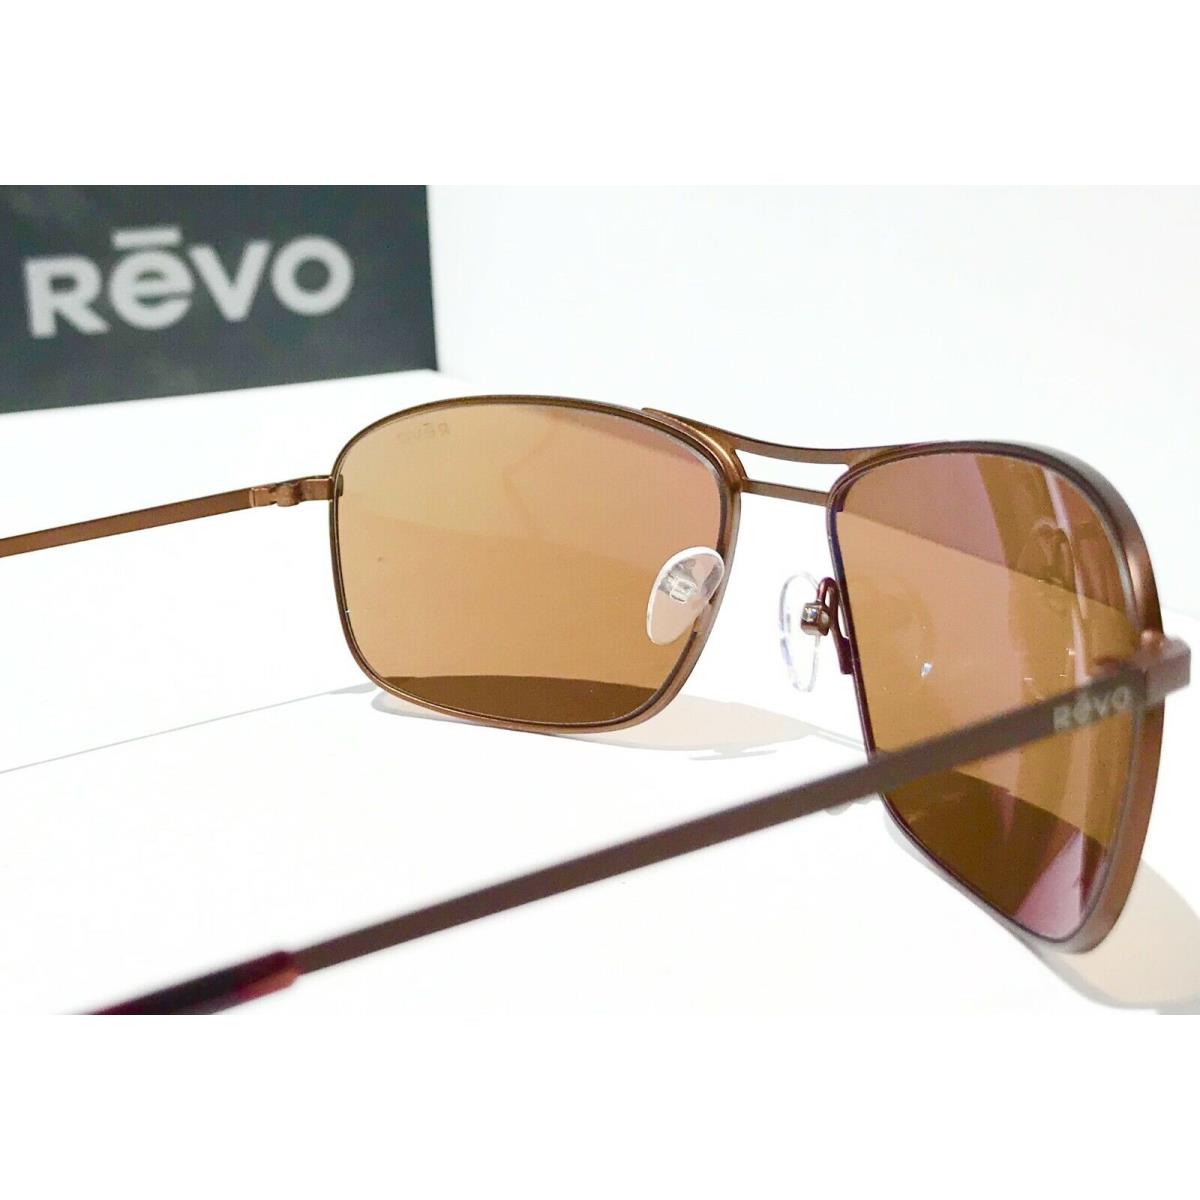 Revo sunglasses Surge - Brown Frame, Brown Lens